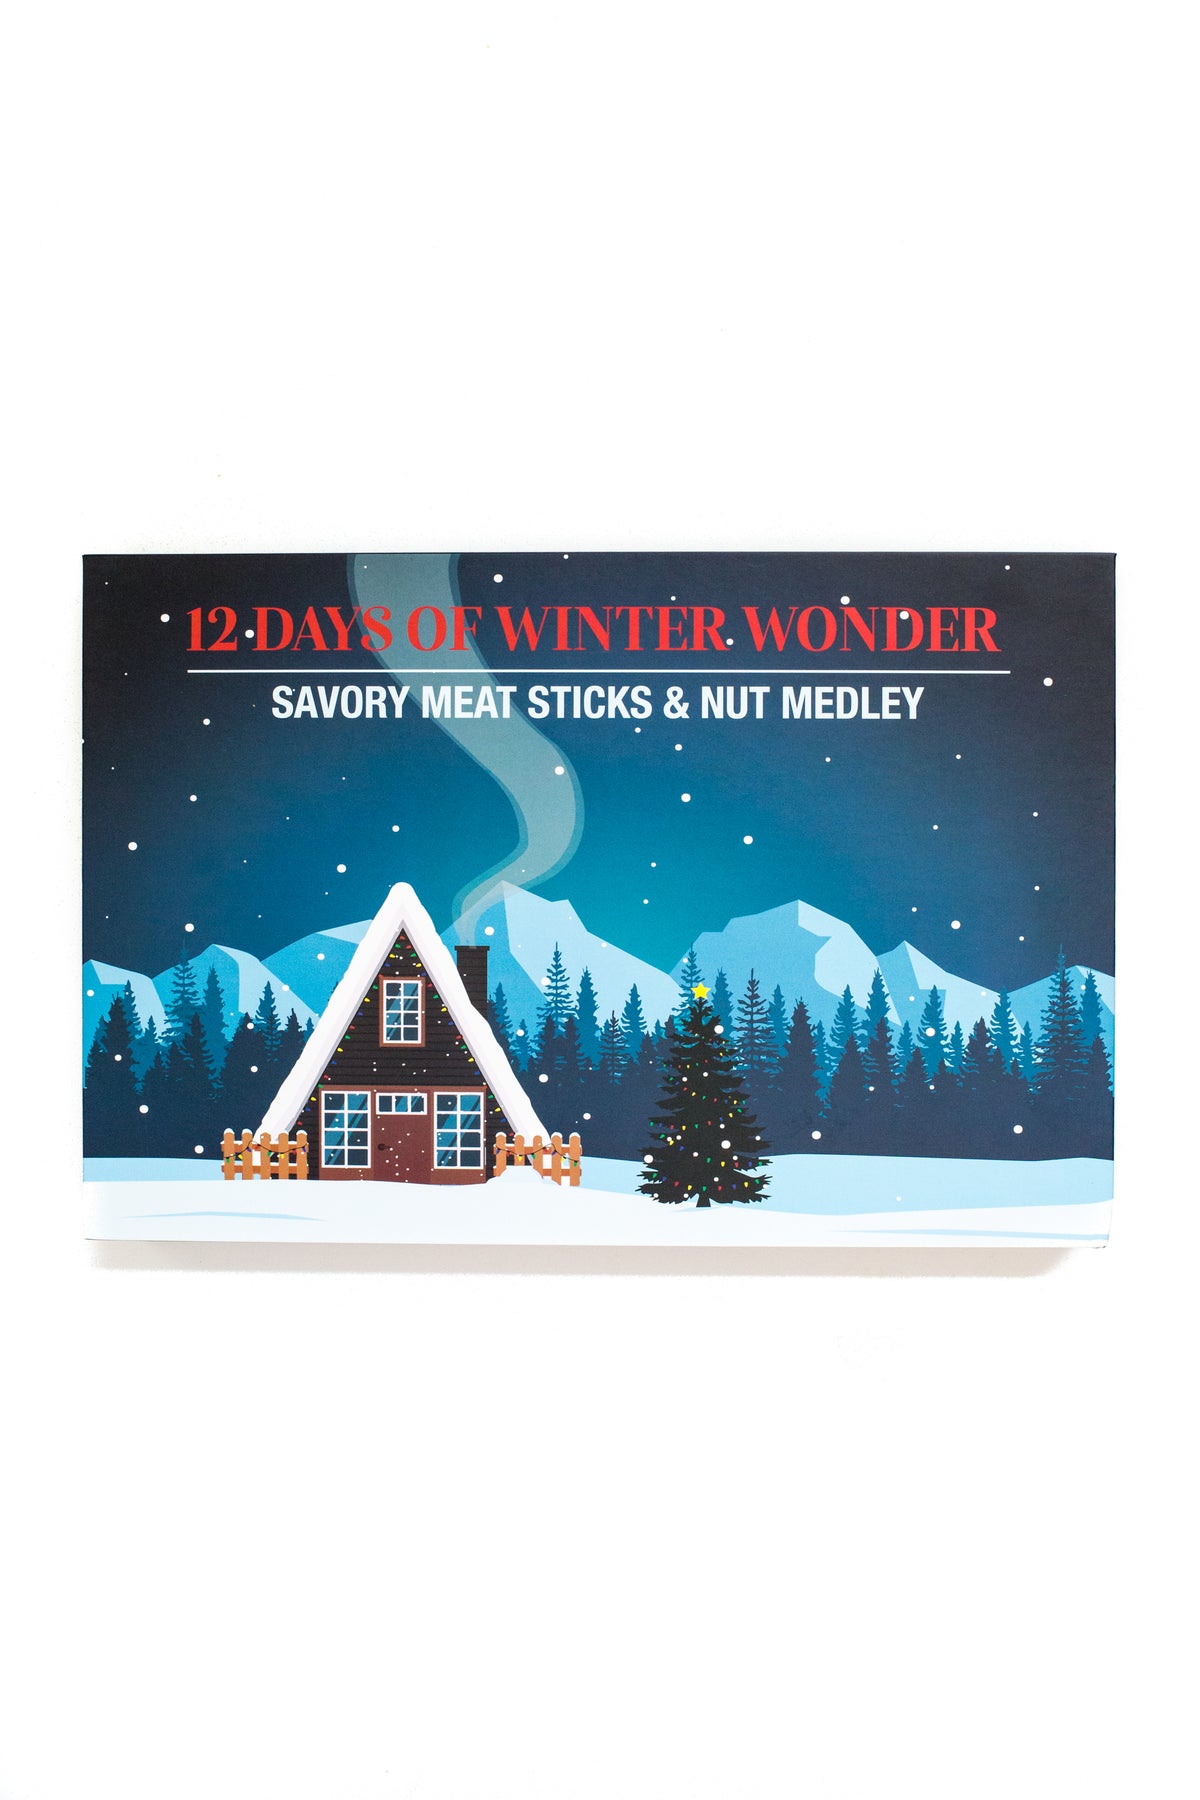 12 Days of Winter Wonder - Savory Meat Sticks and Nut Medley